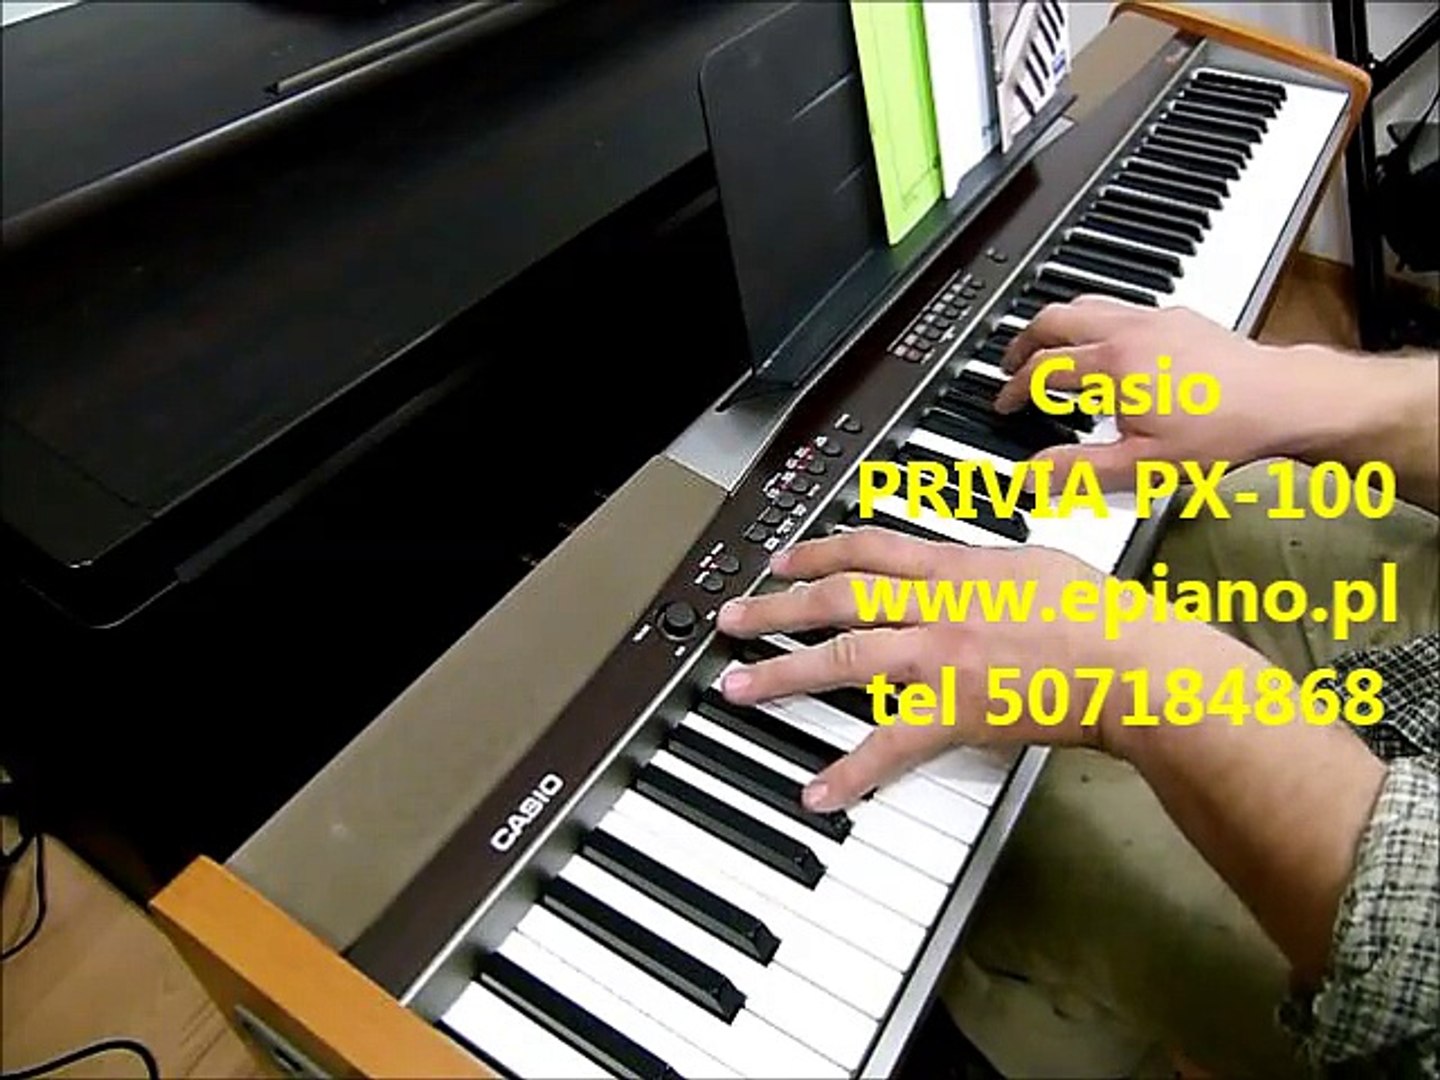 PX-100 Casio Privia test - video Dailymotion